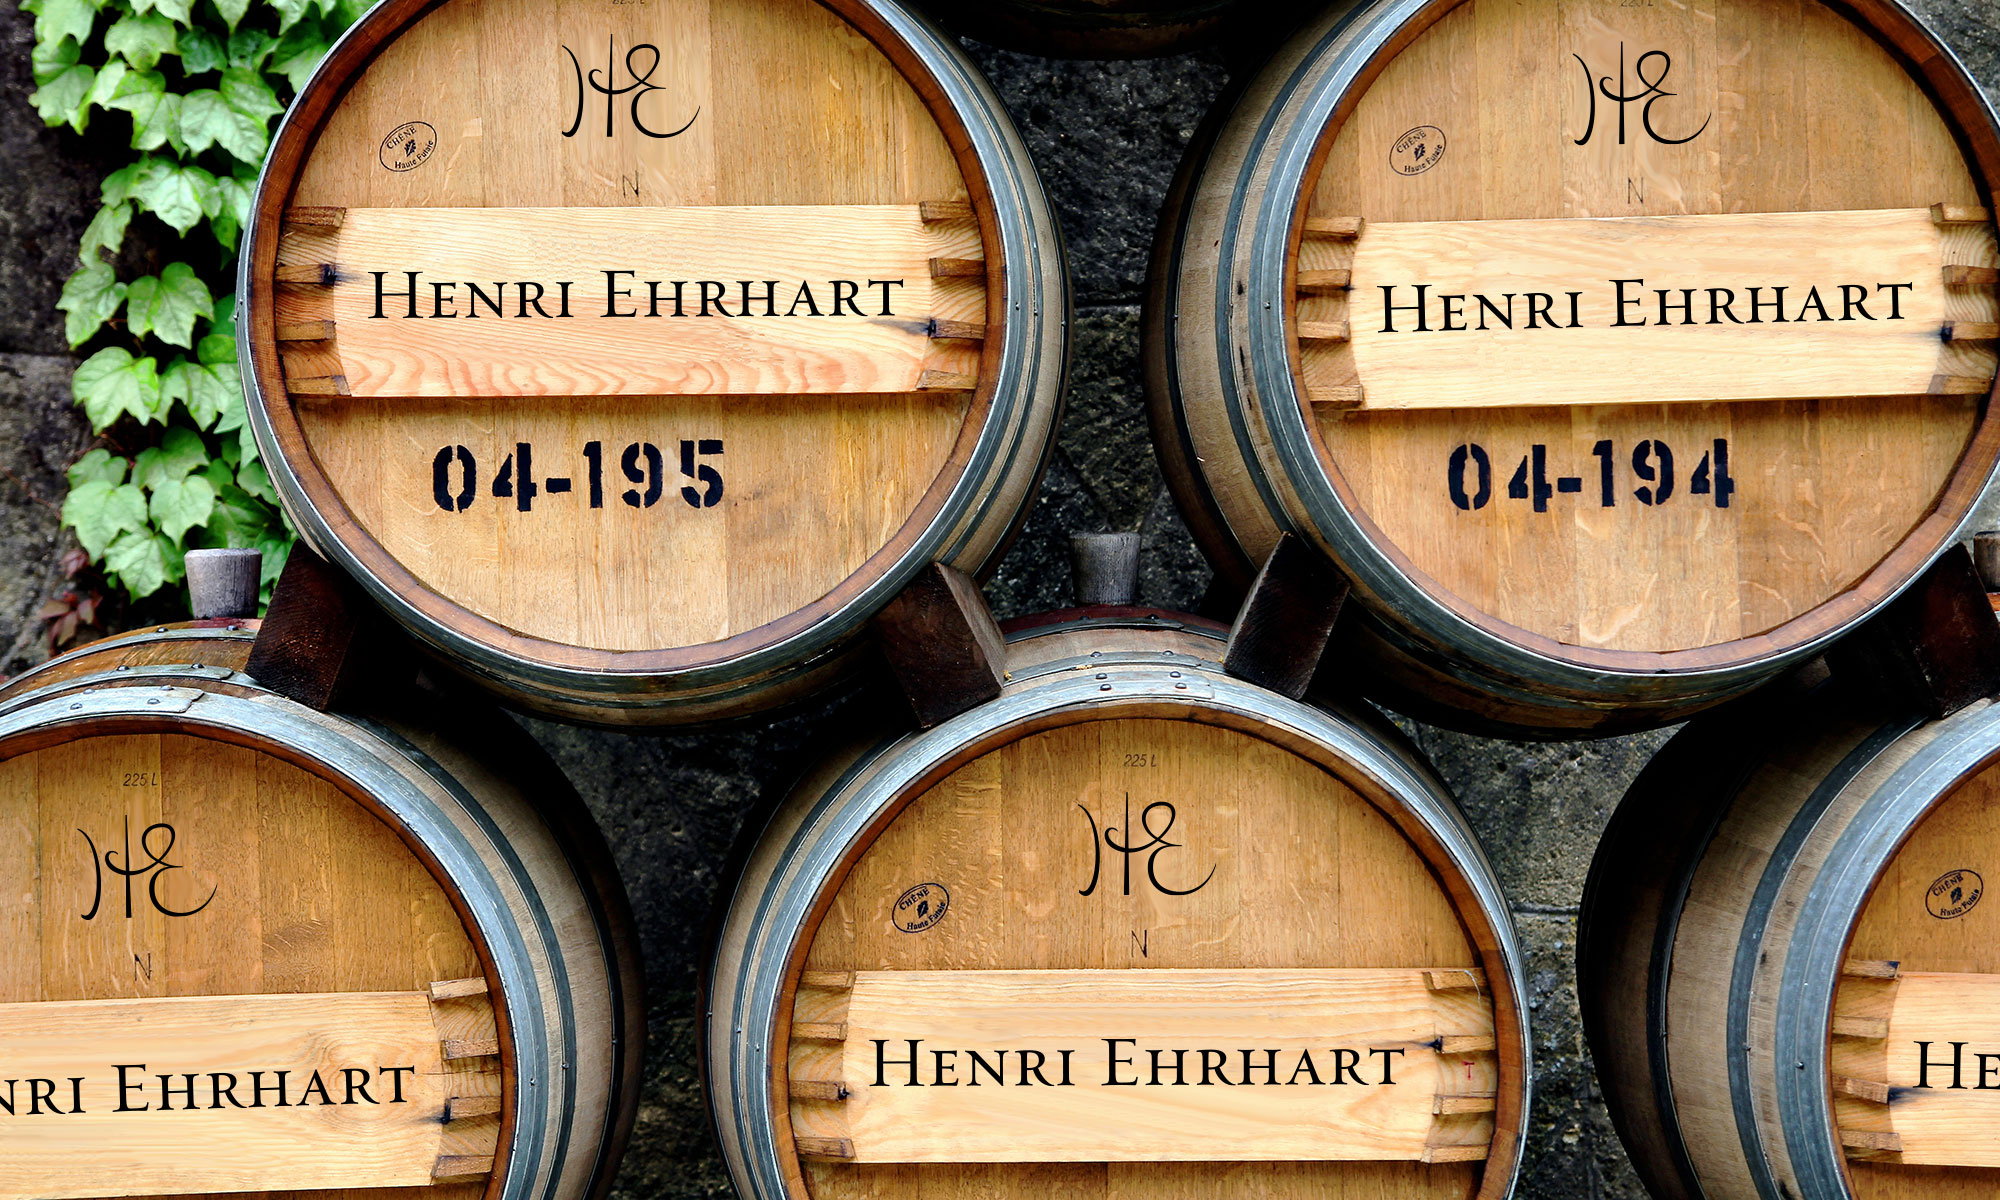 Henri Ehrhart wine casks